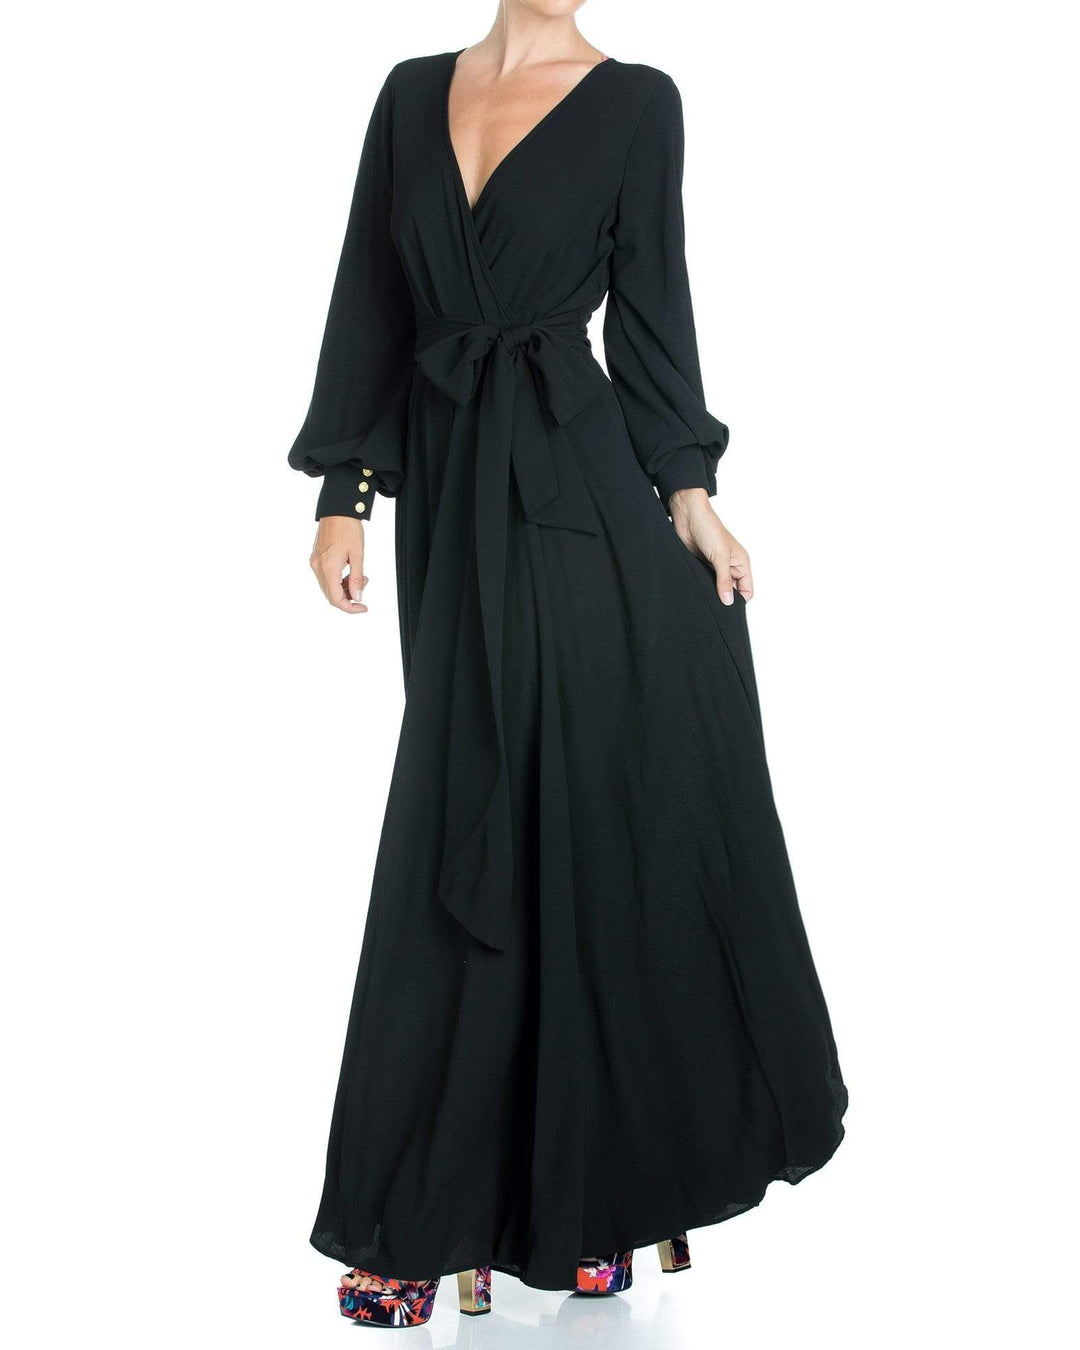 LilyPad Maxi Dress - Black by Meghan Fabulous